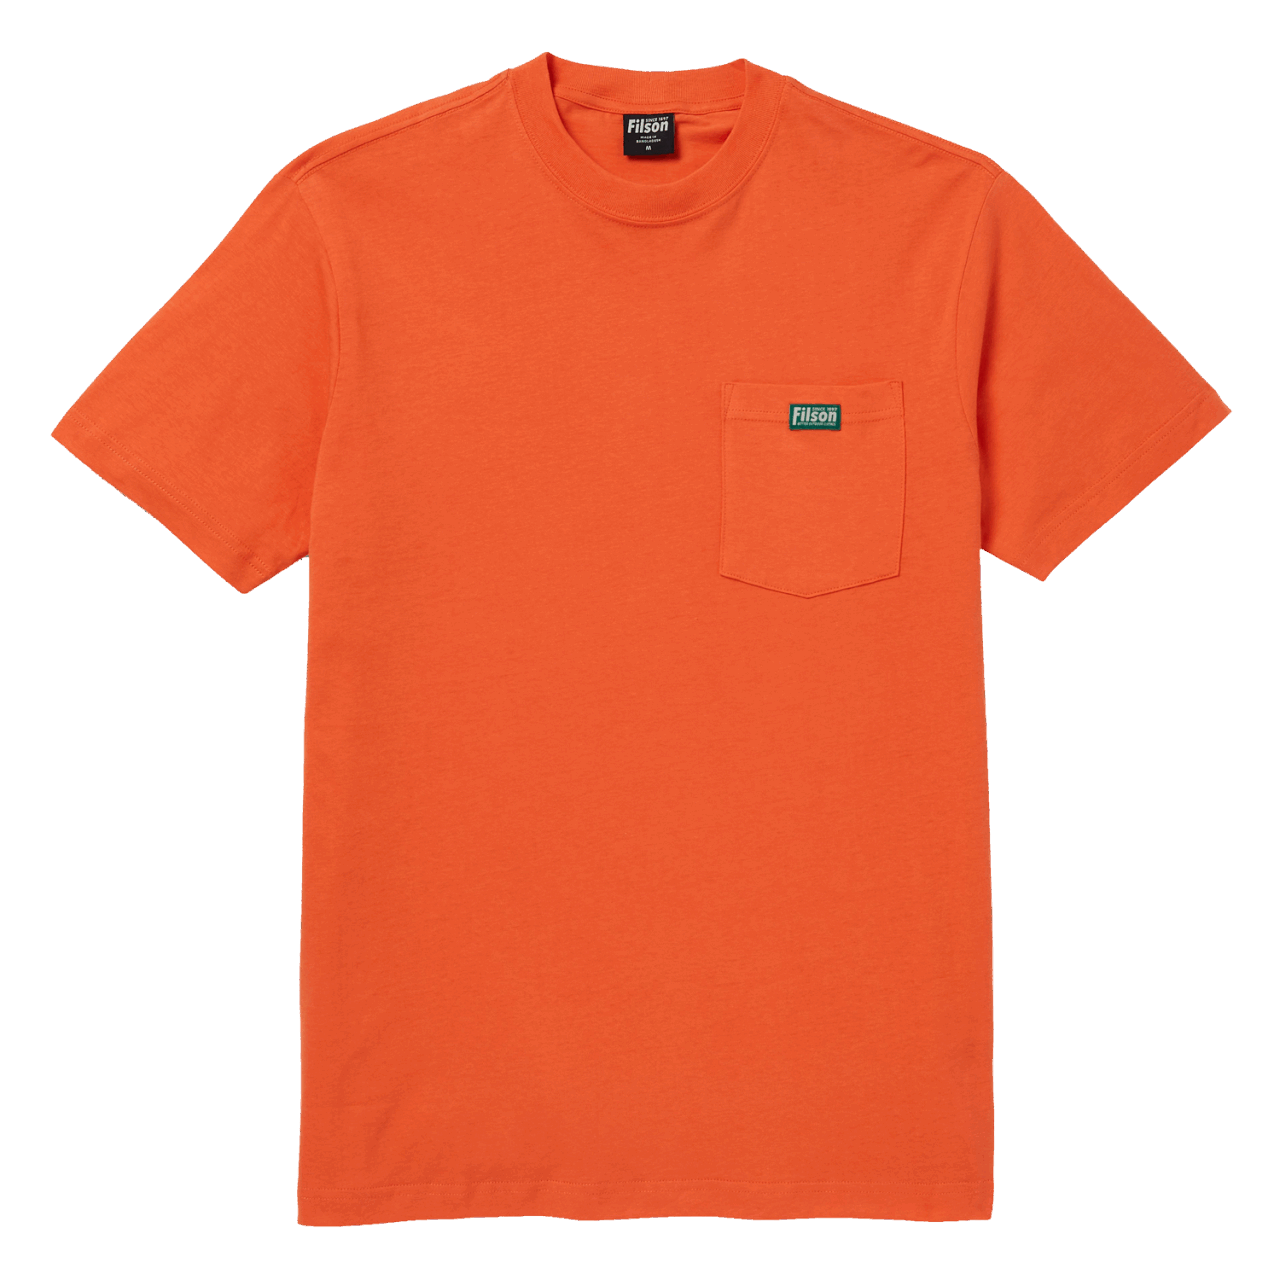 Filson Ranger Graphic T-Shirt - blaze orange